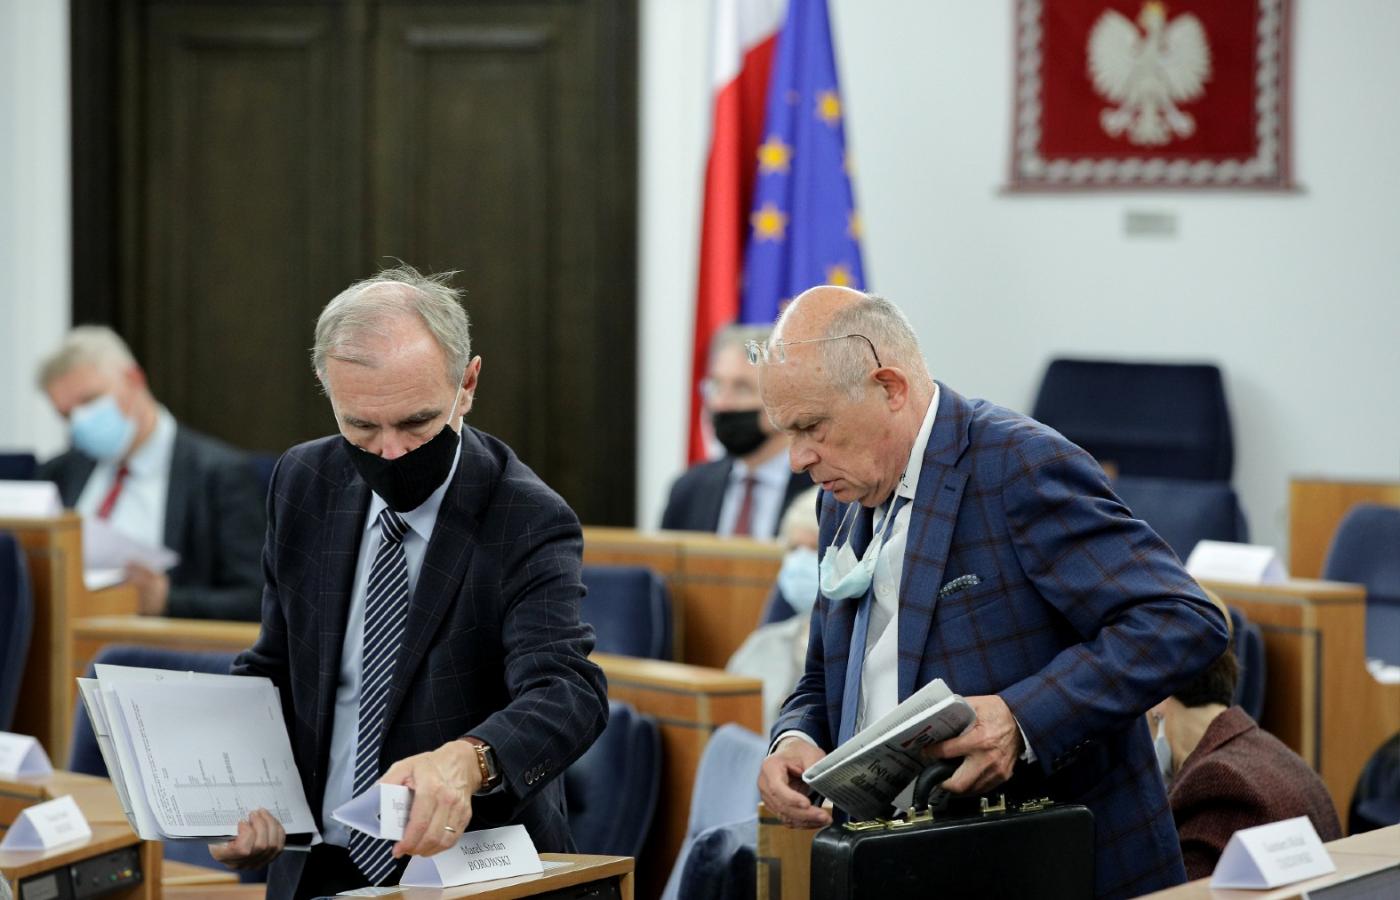 Senatorowie Bogdan Klich i Marek Borowski podczas posiedzenia Senatu